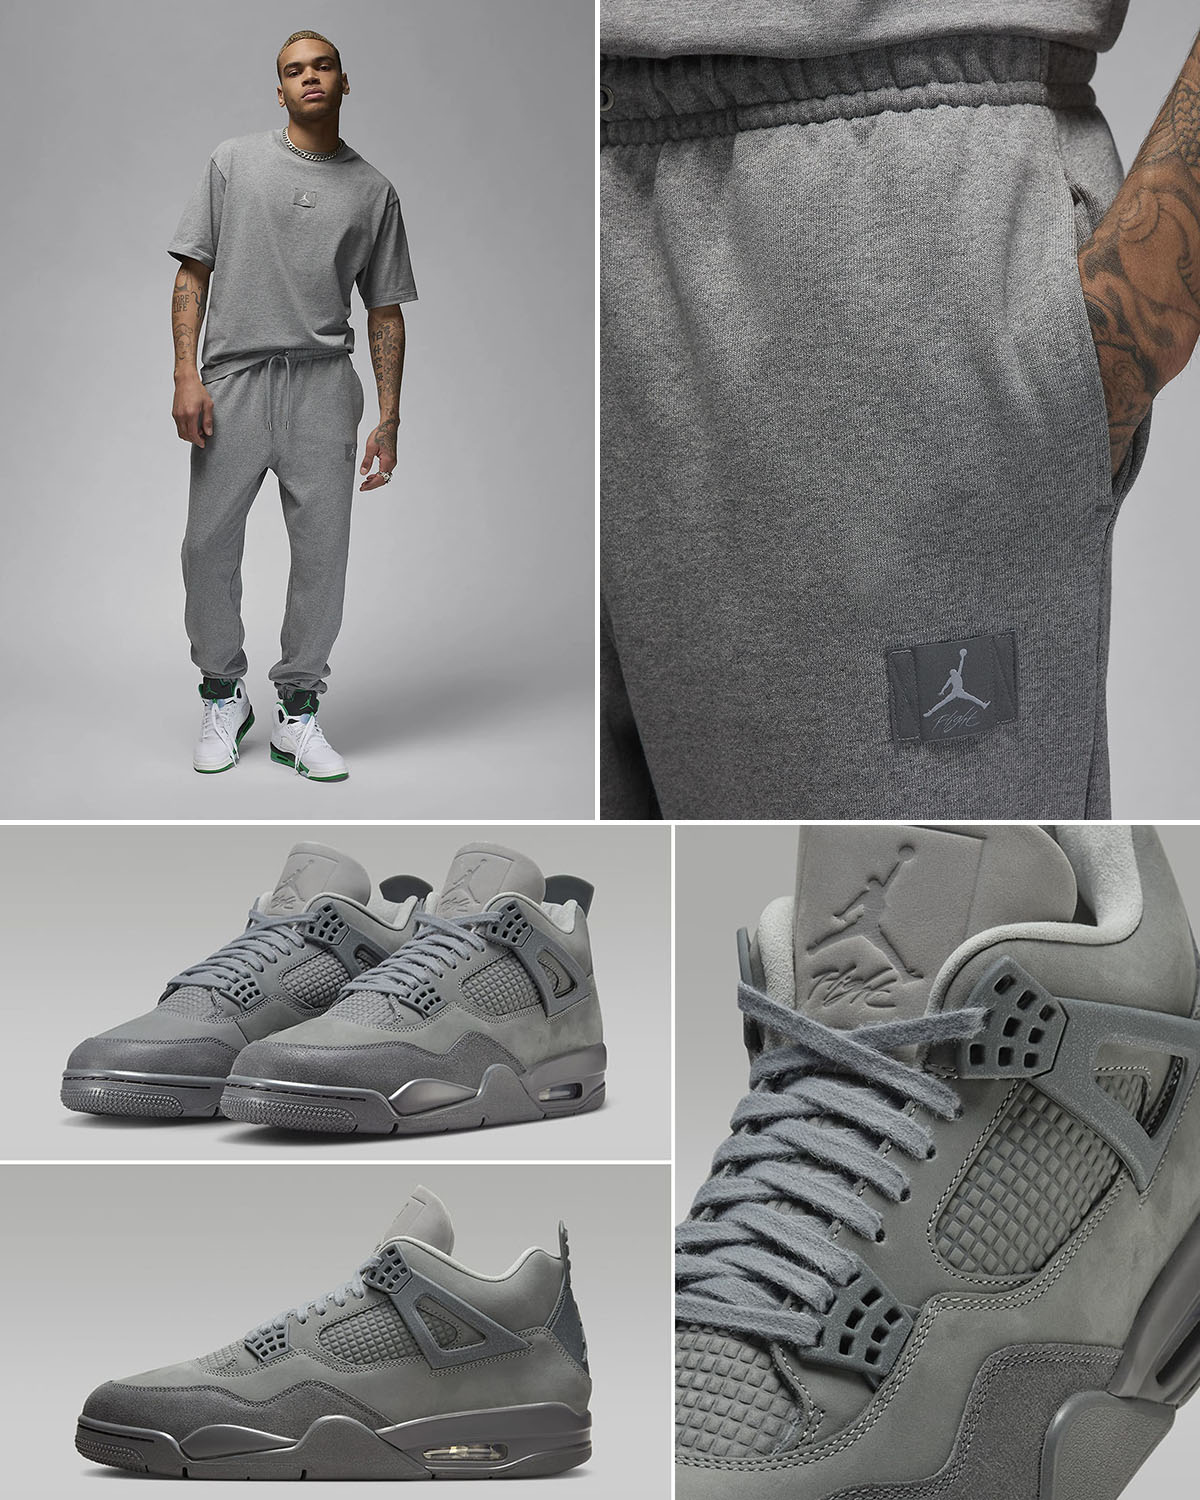 Air Jordan 4 Wet Cement Paris Olympics Pants Matching Outfit